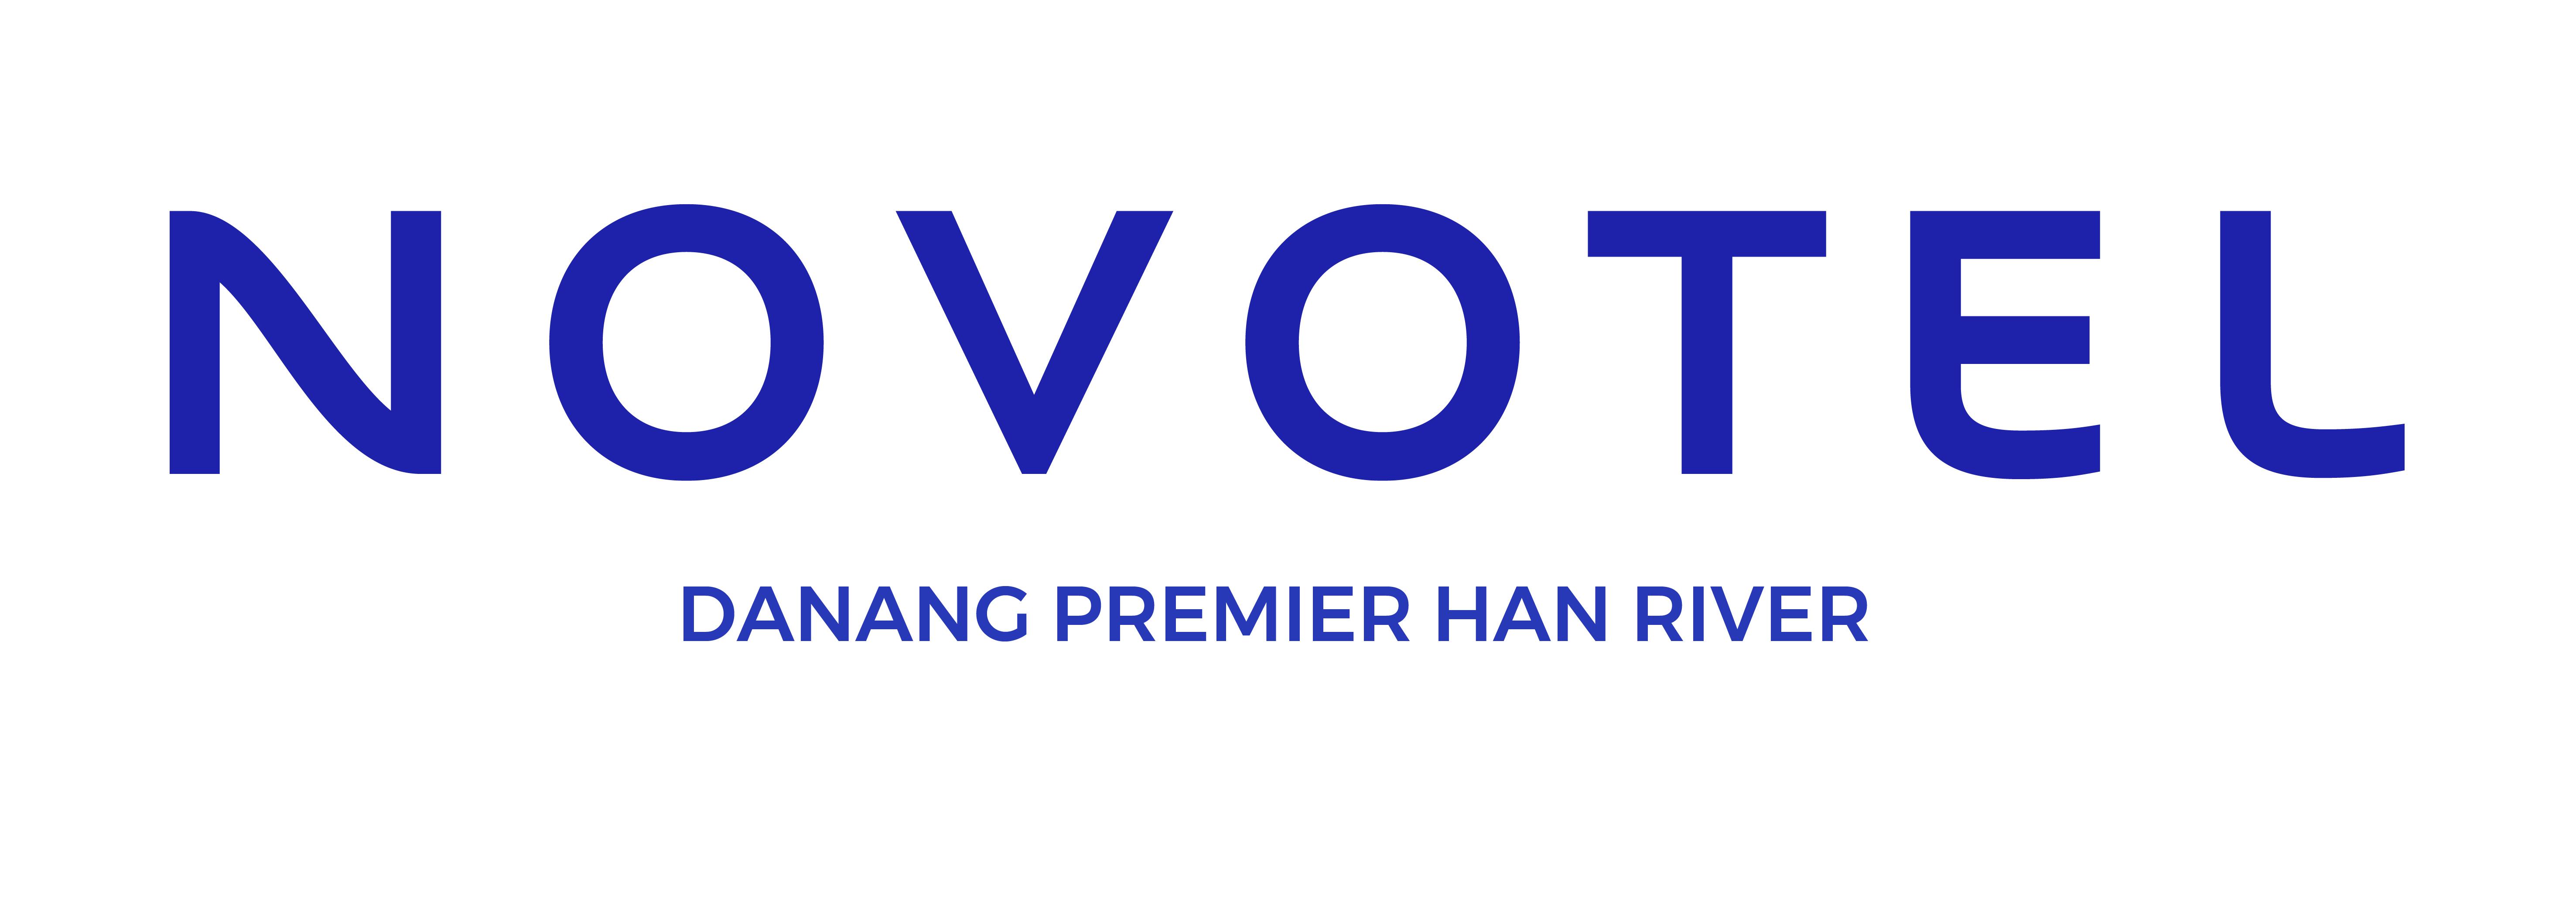 Novotel Danang Premier Han River